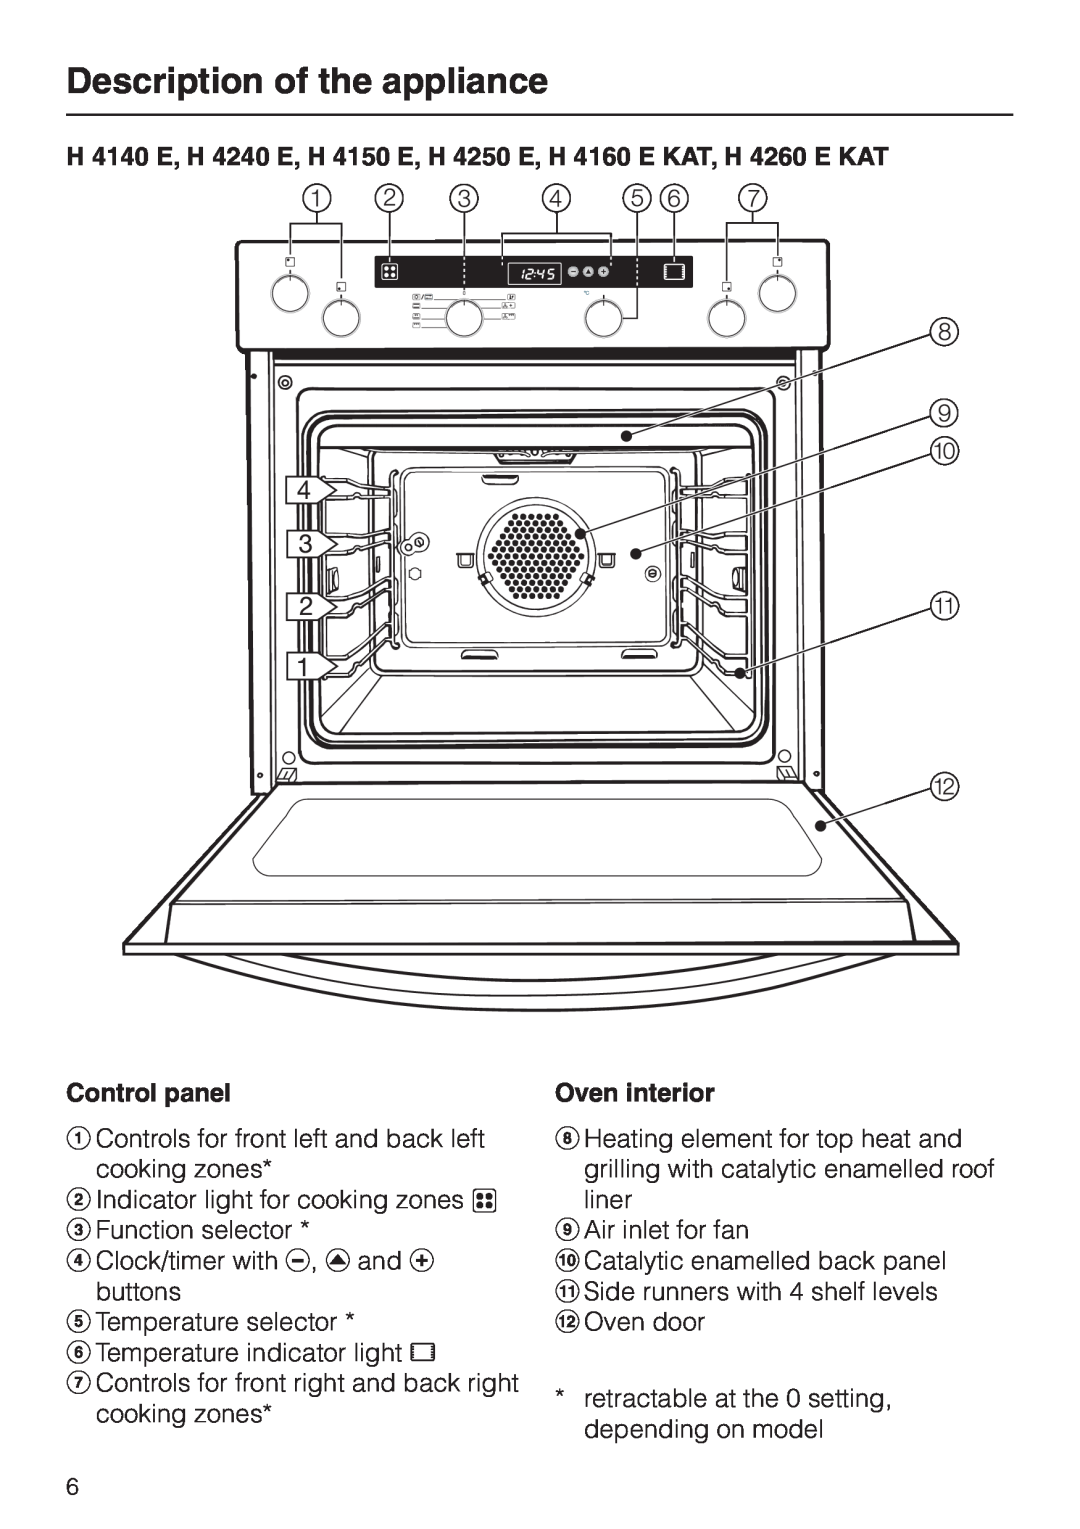 Miele H 4260, H 4150, H 4220, H 4130, H 4160, H 4120, H 4140, H 4230 Description of the appliance, Control panel, Oven interior 